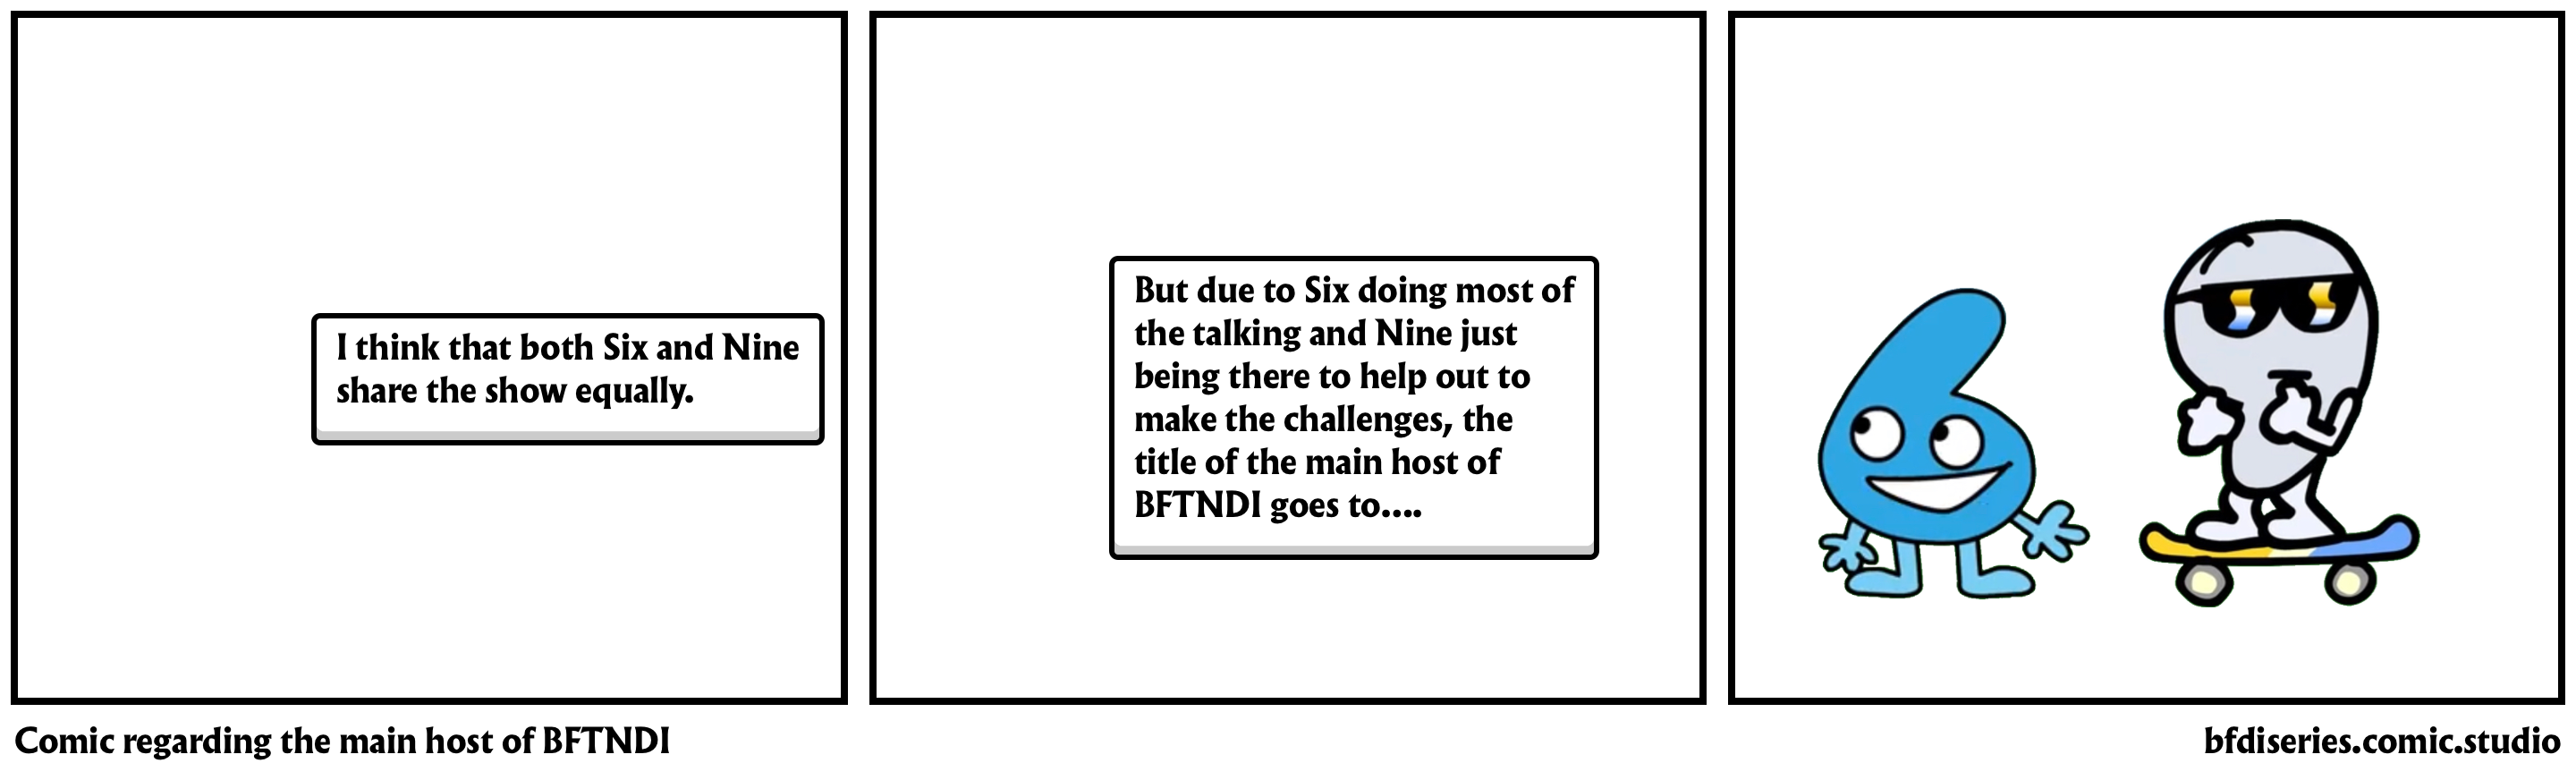 Comic regarding the main host of BFTNDI